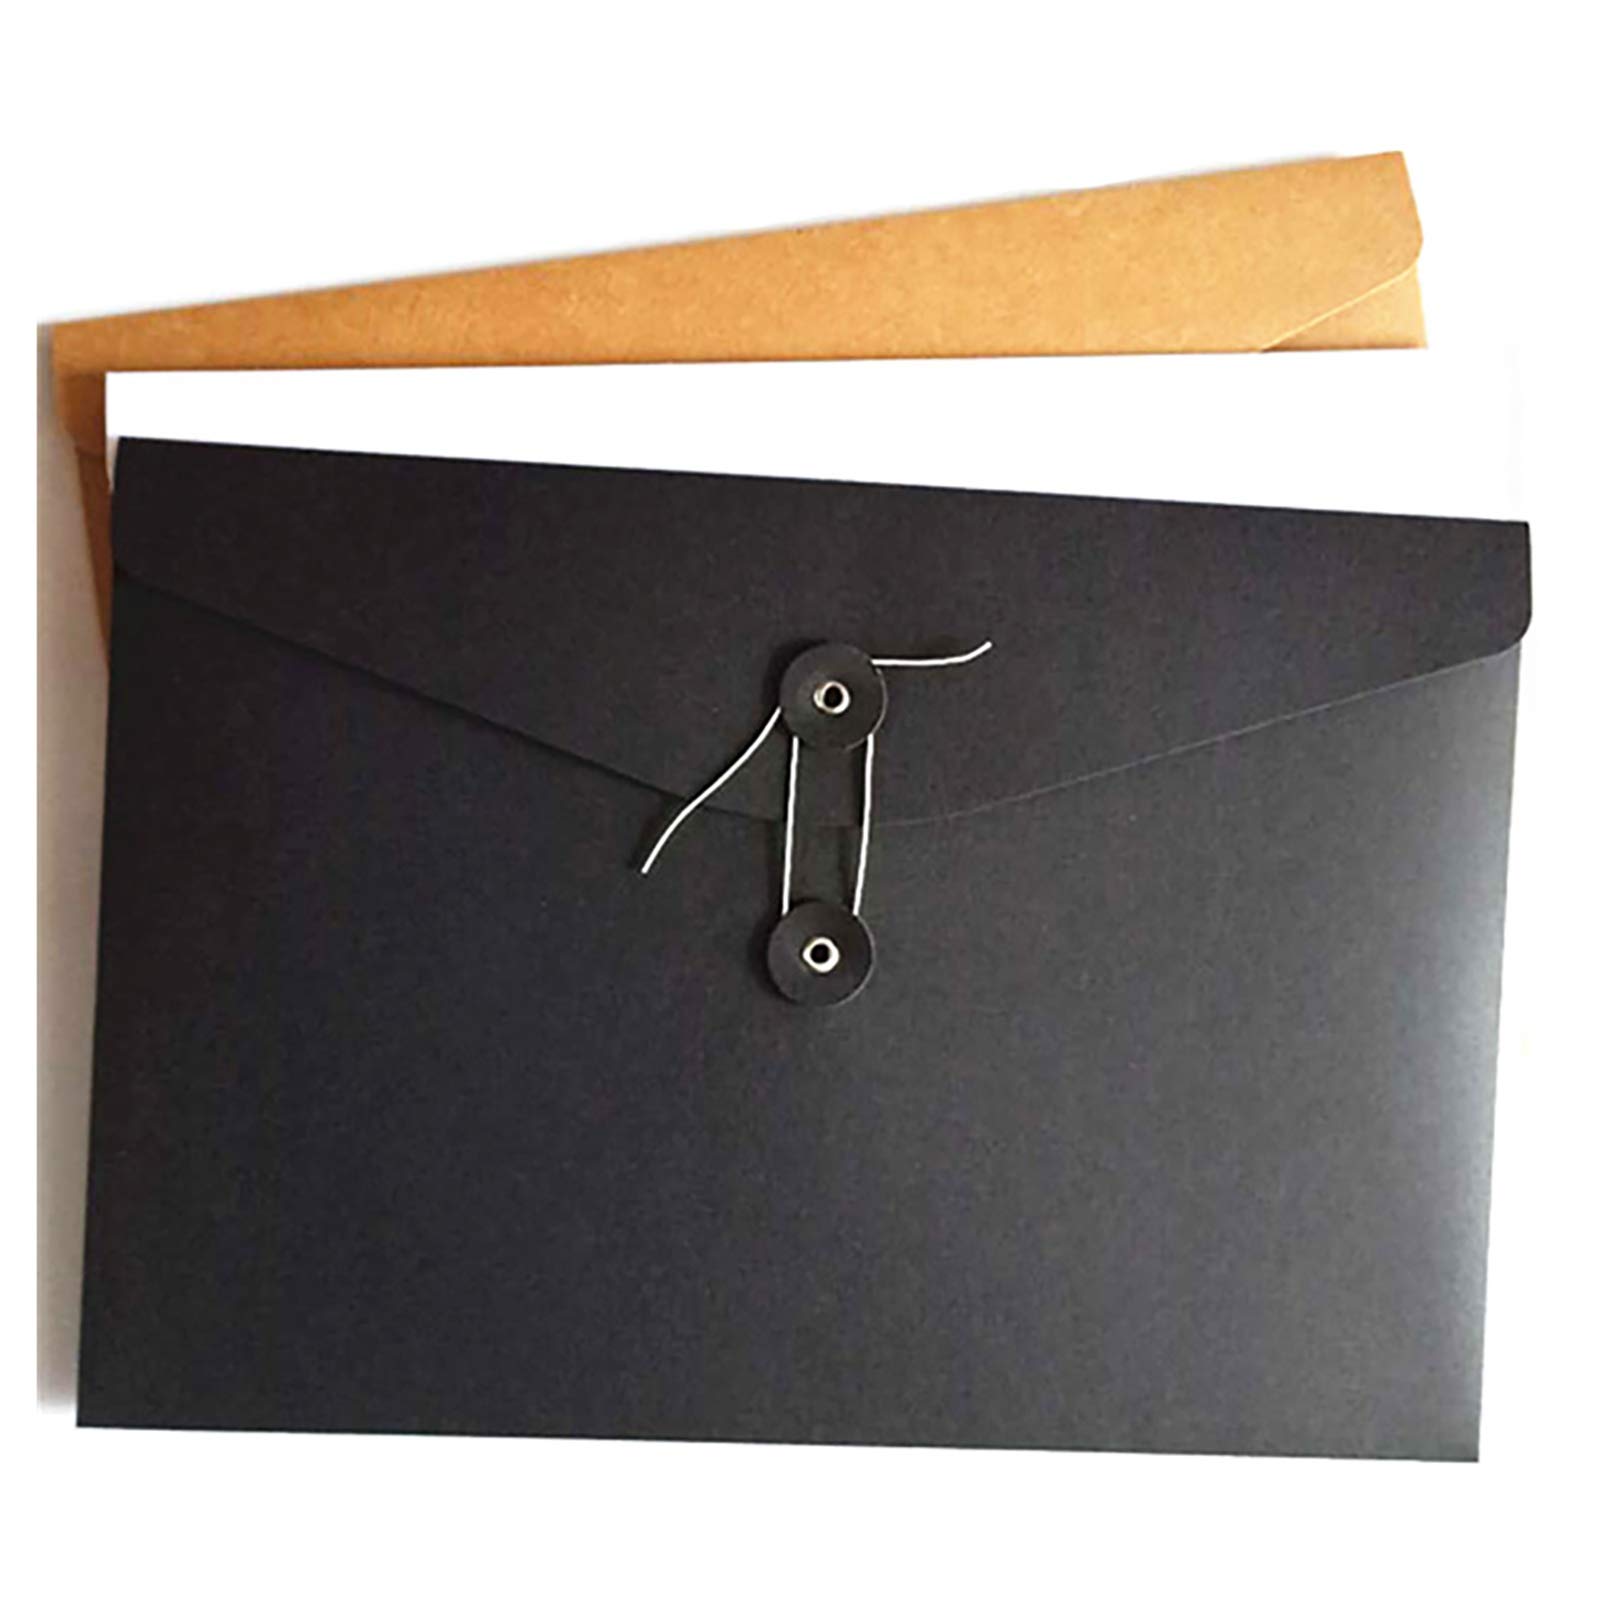 A4 Kraft String Enveloppe Folder Pocket for Office Projects Contrats Bills File Fichier Document Holder Fichier Organisateur